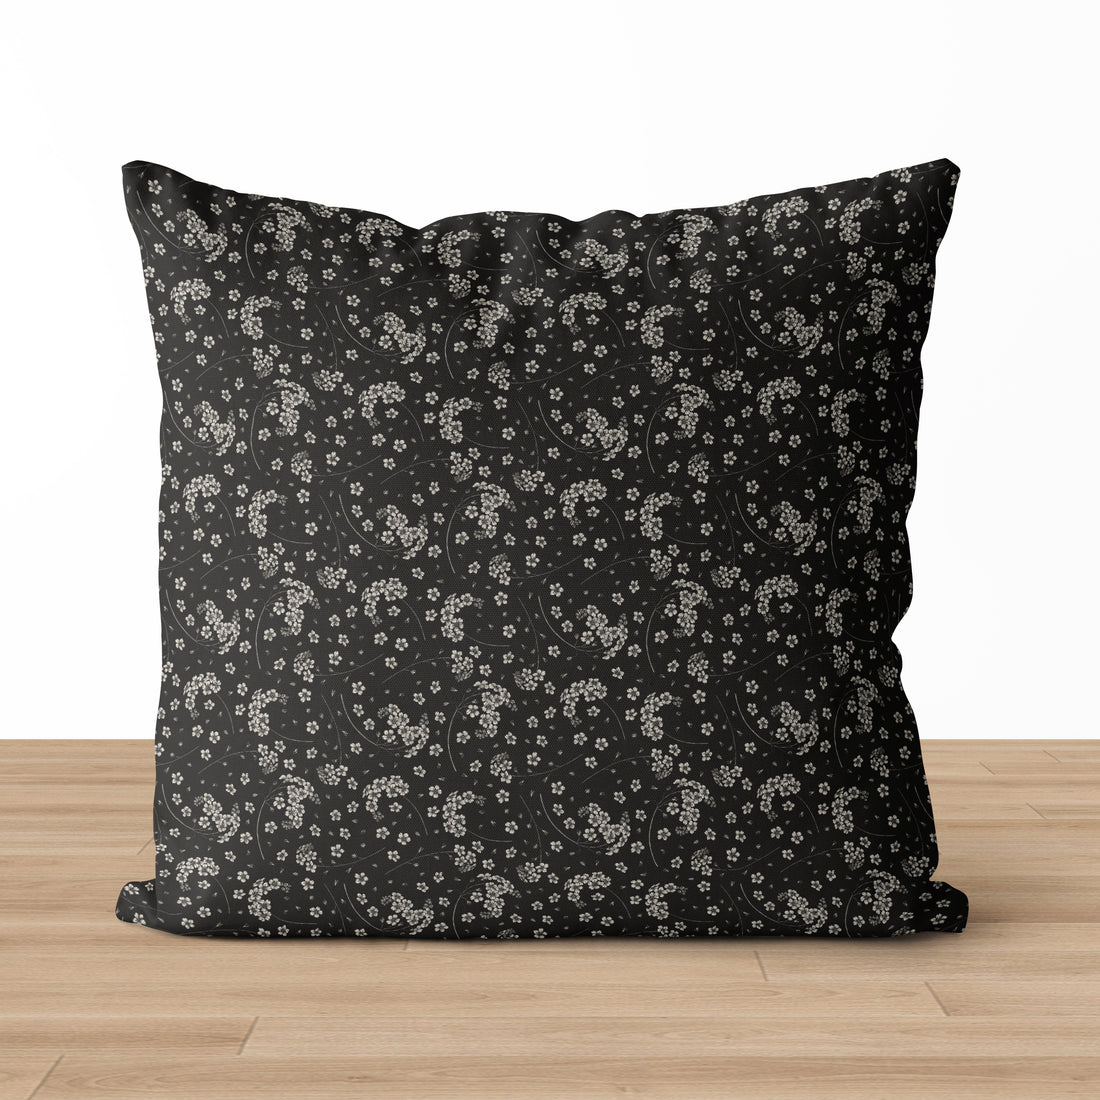 Dark Floral Dream Pillow Cover